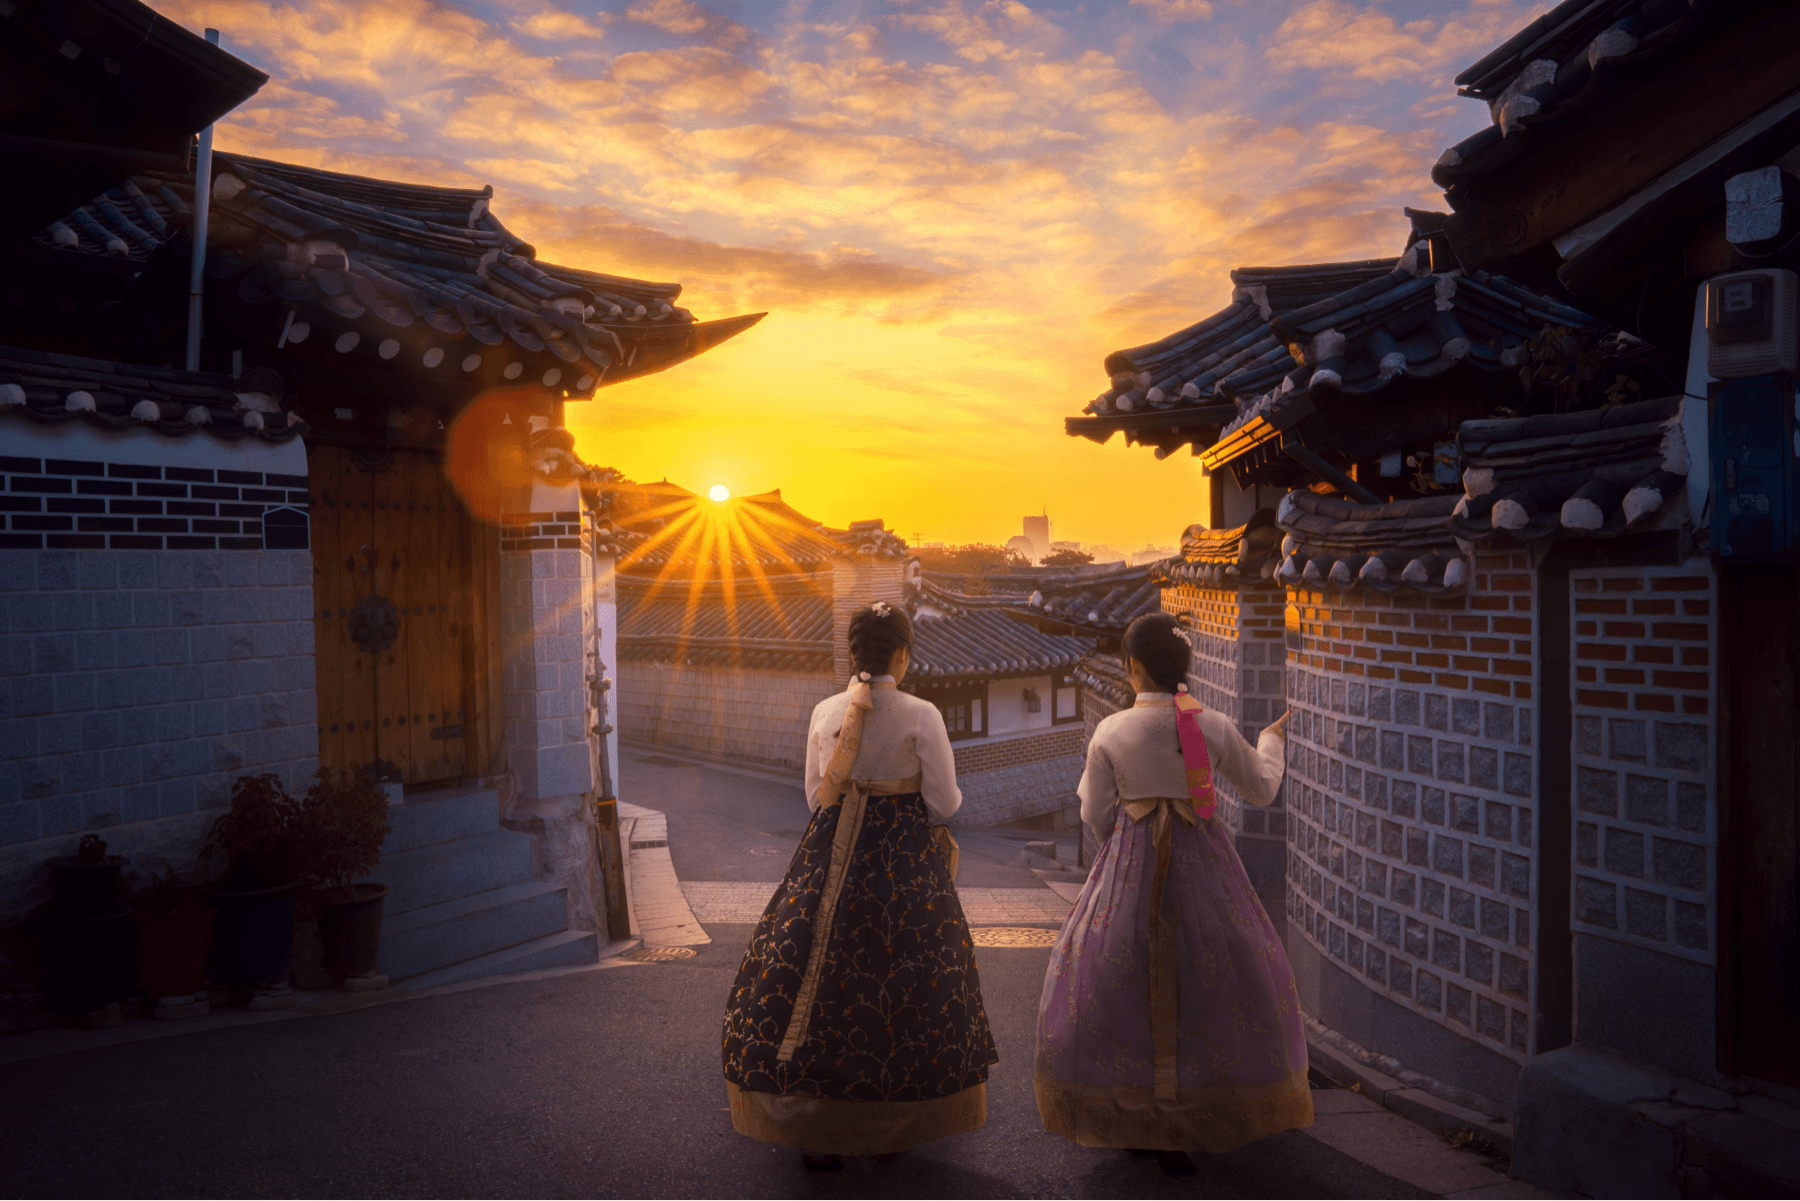 Asian ladies in Hanbok dress walk together in Korea